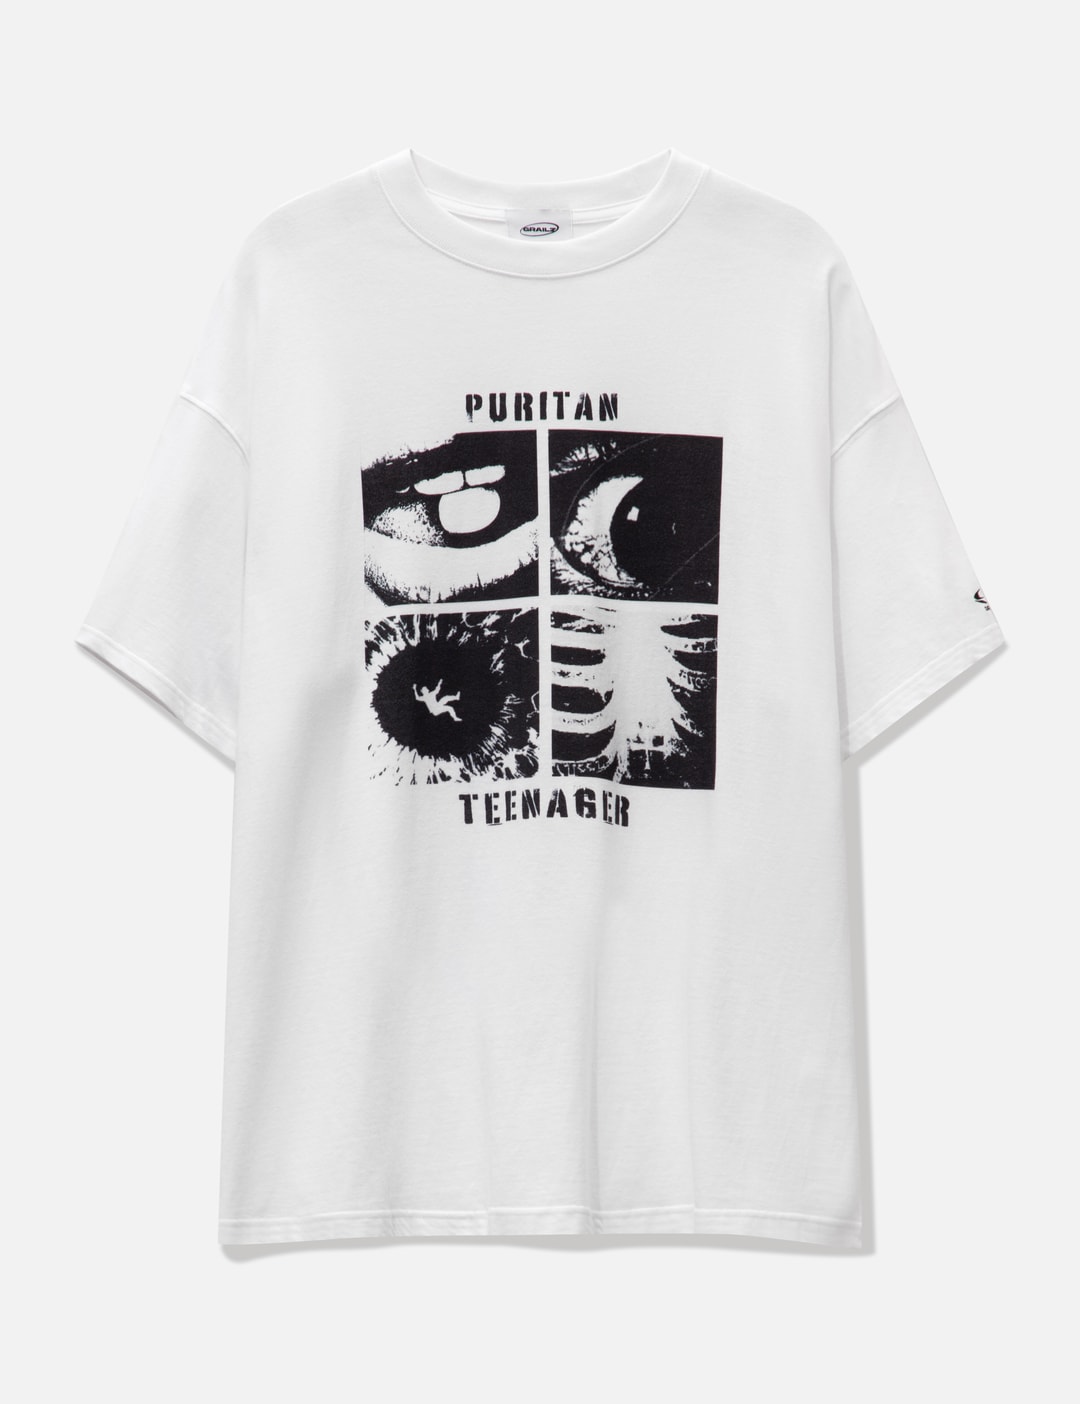 GRAILZ - Puritan Teenage T-shirt | HBX - Globally Curated Fashion and ...